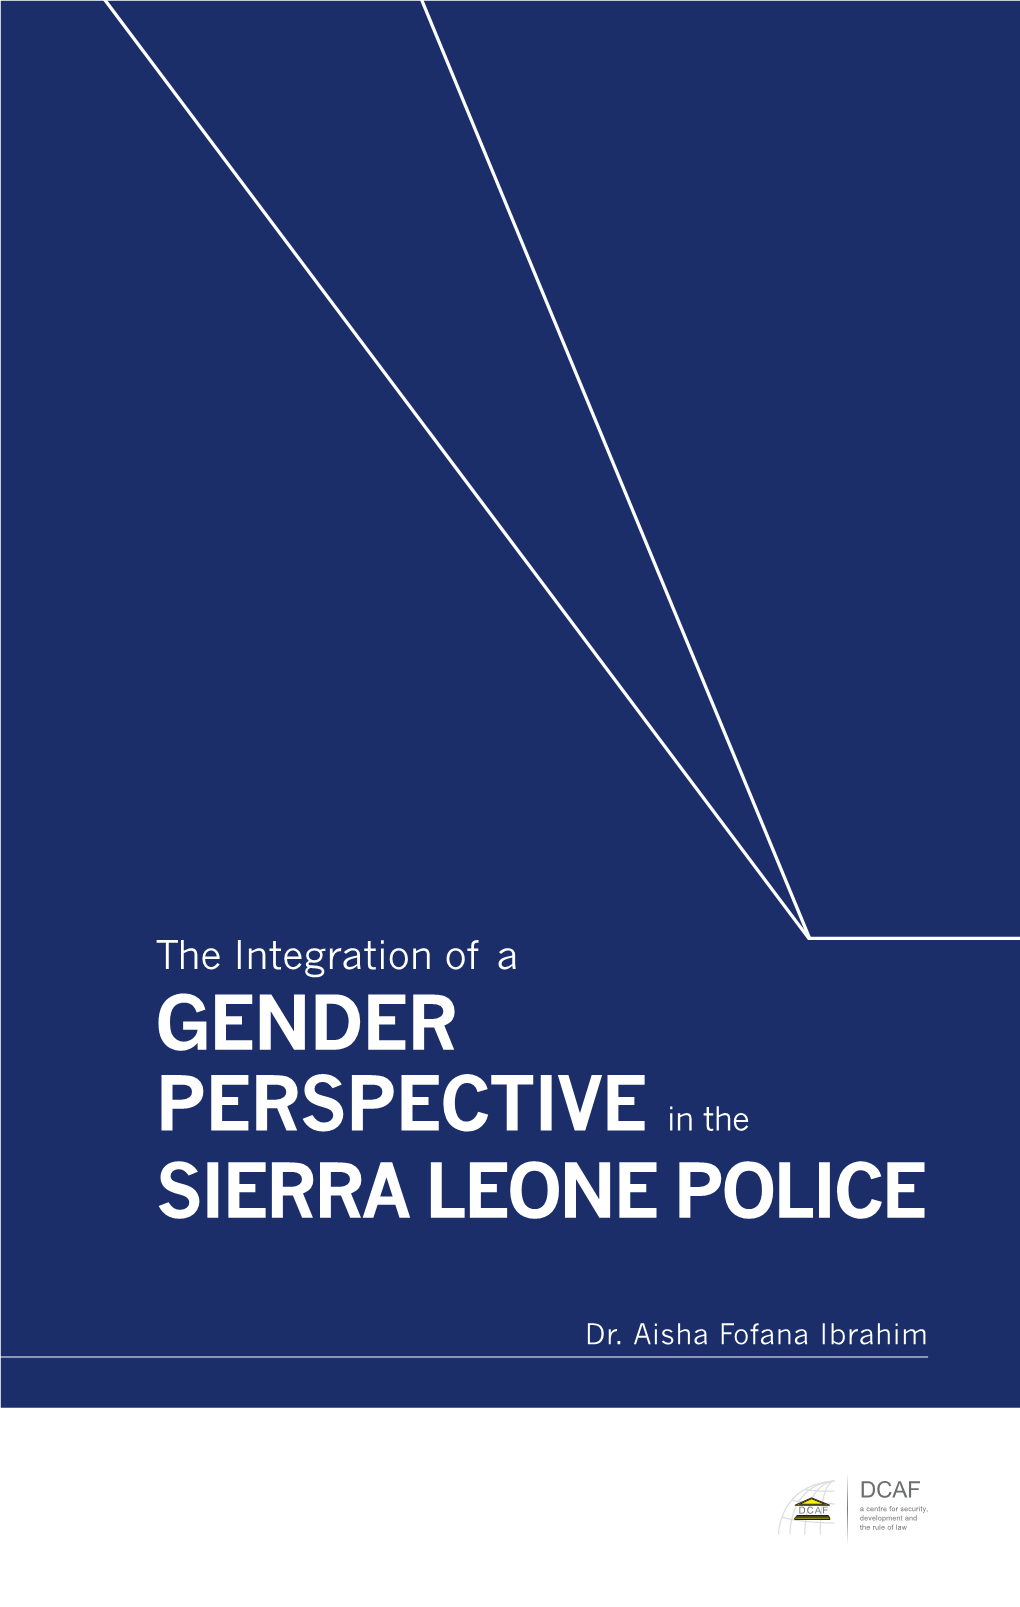 Sierra Leone Police